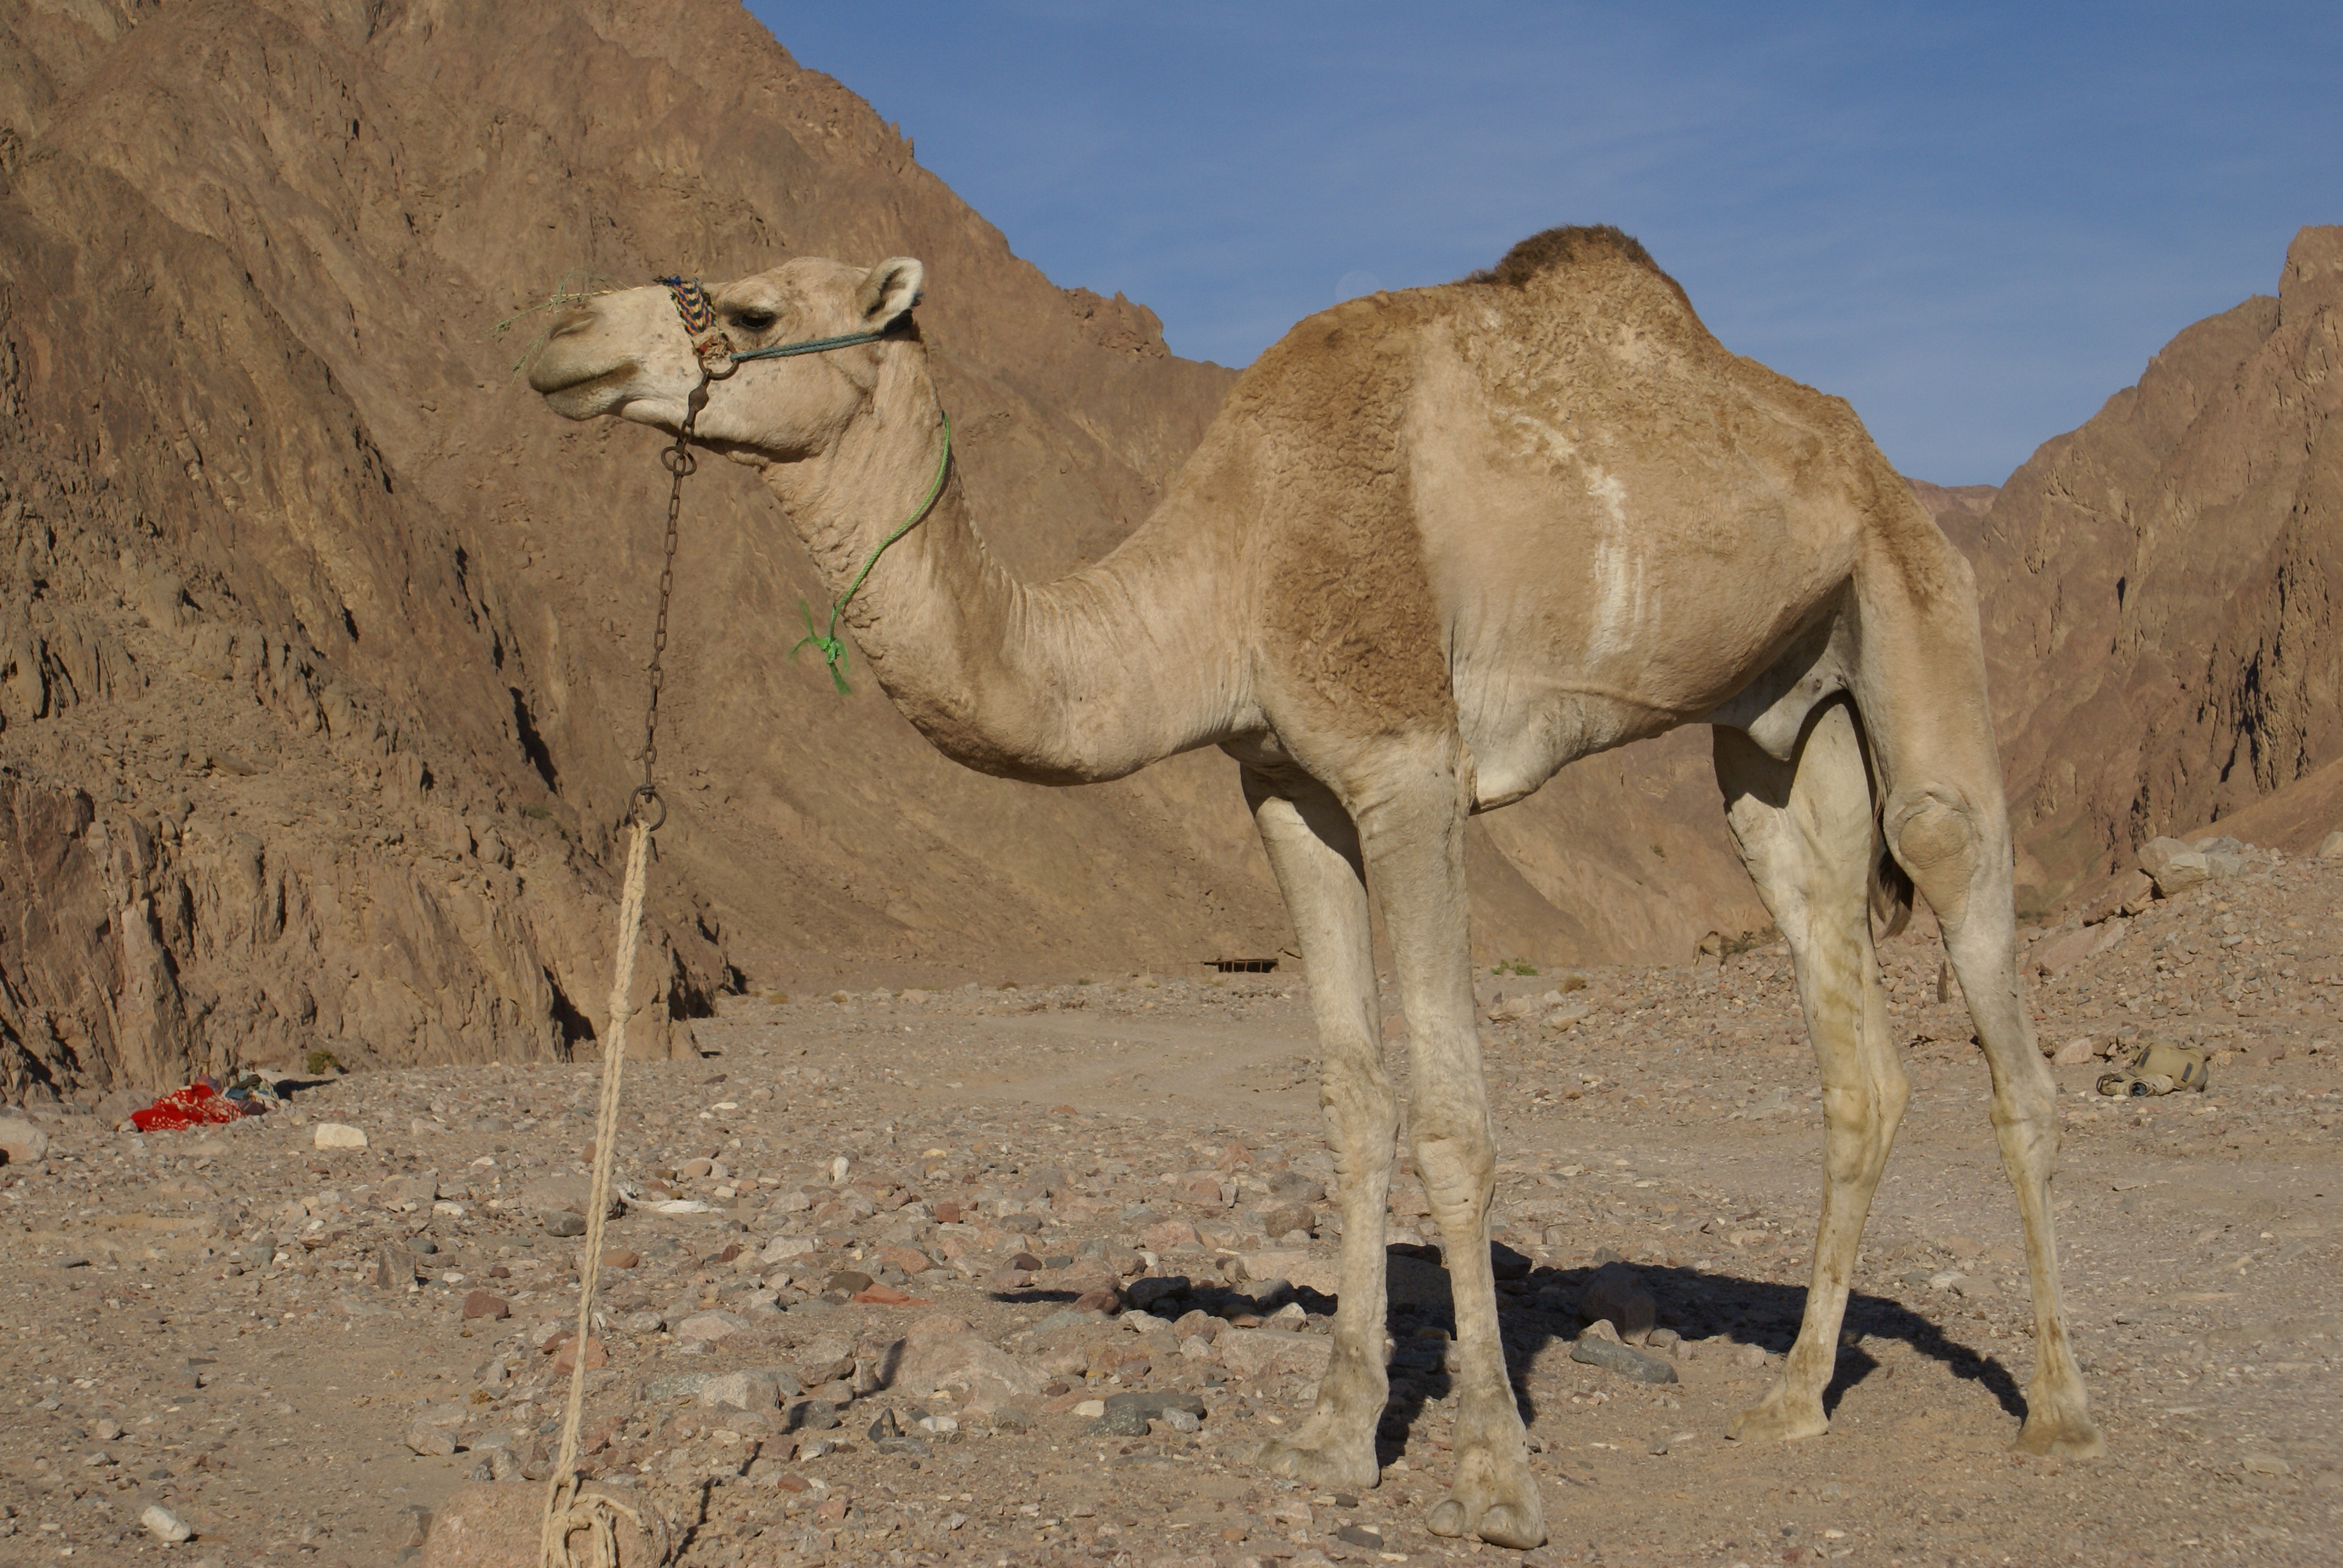 photograph of a camel